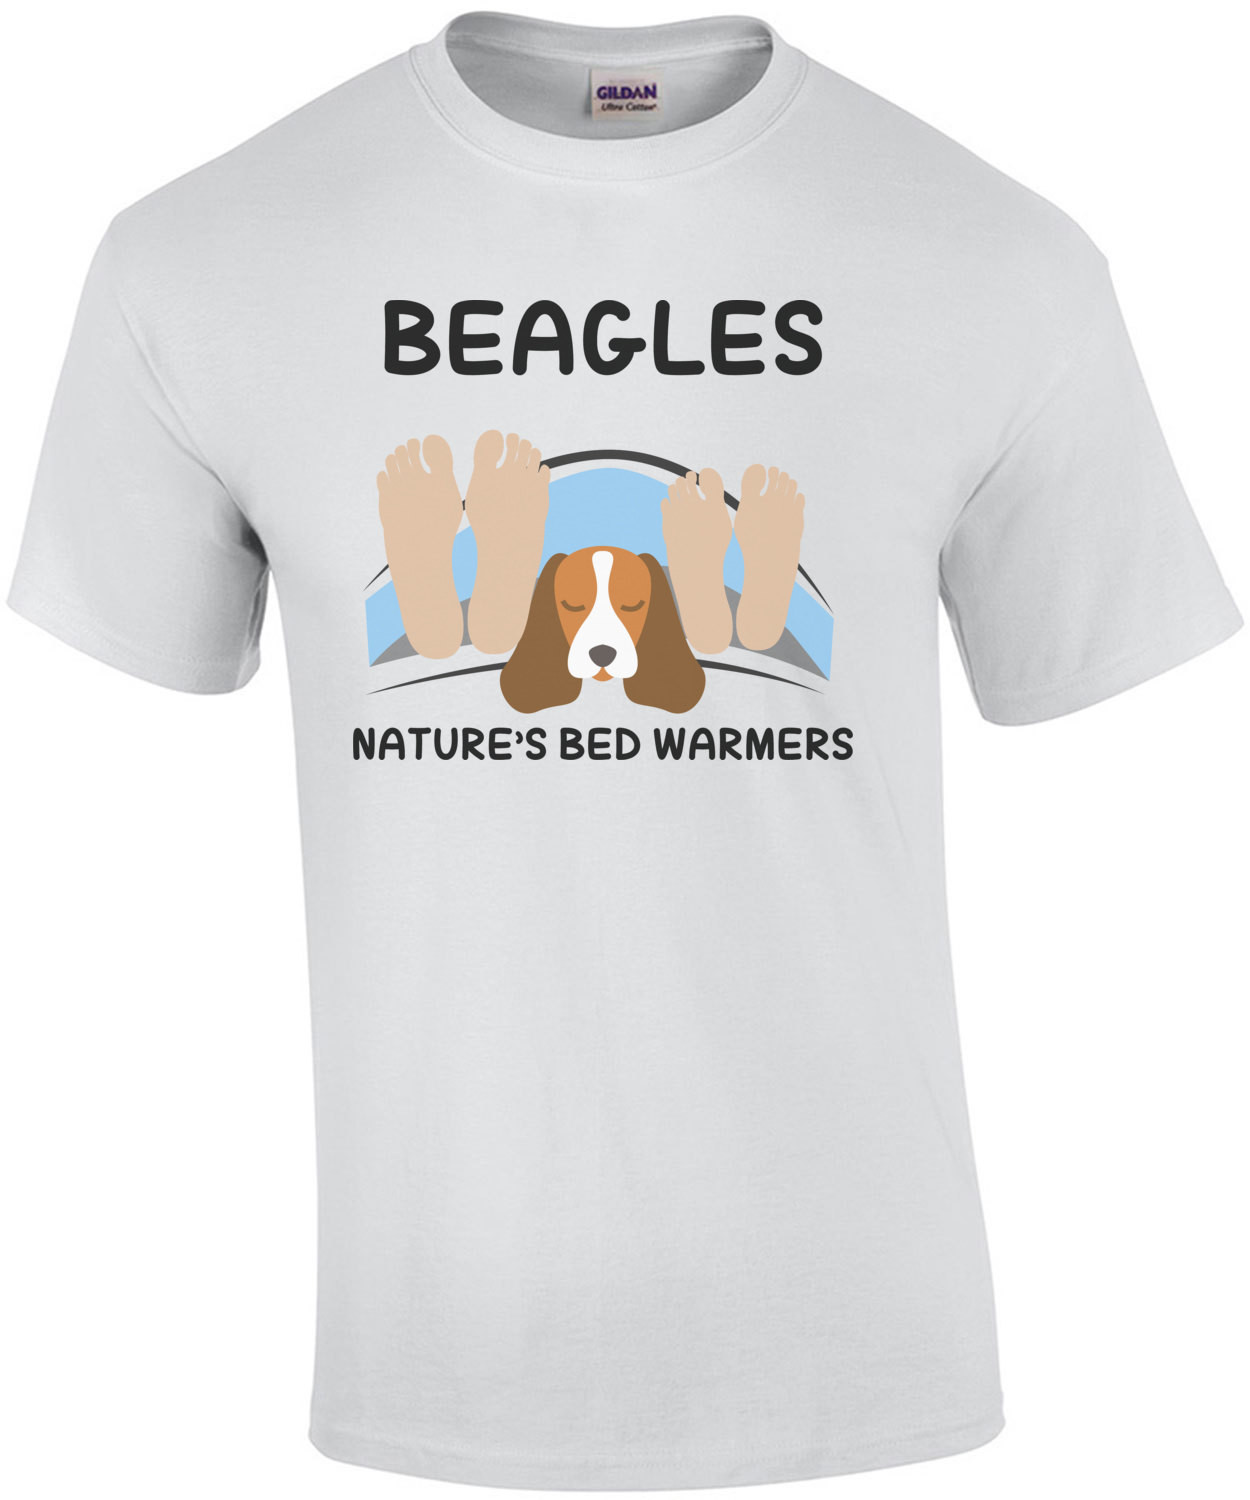 Beagles - Nature's Bed Warmers - Beagle T-Shirt